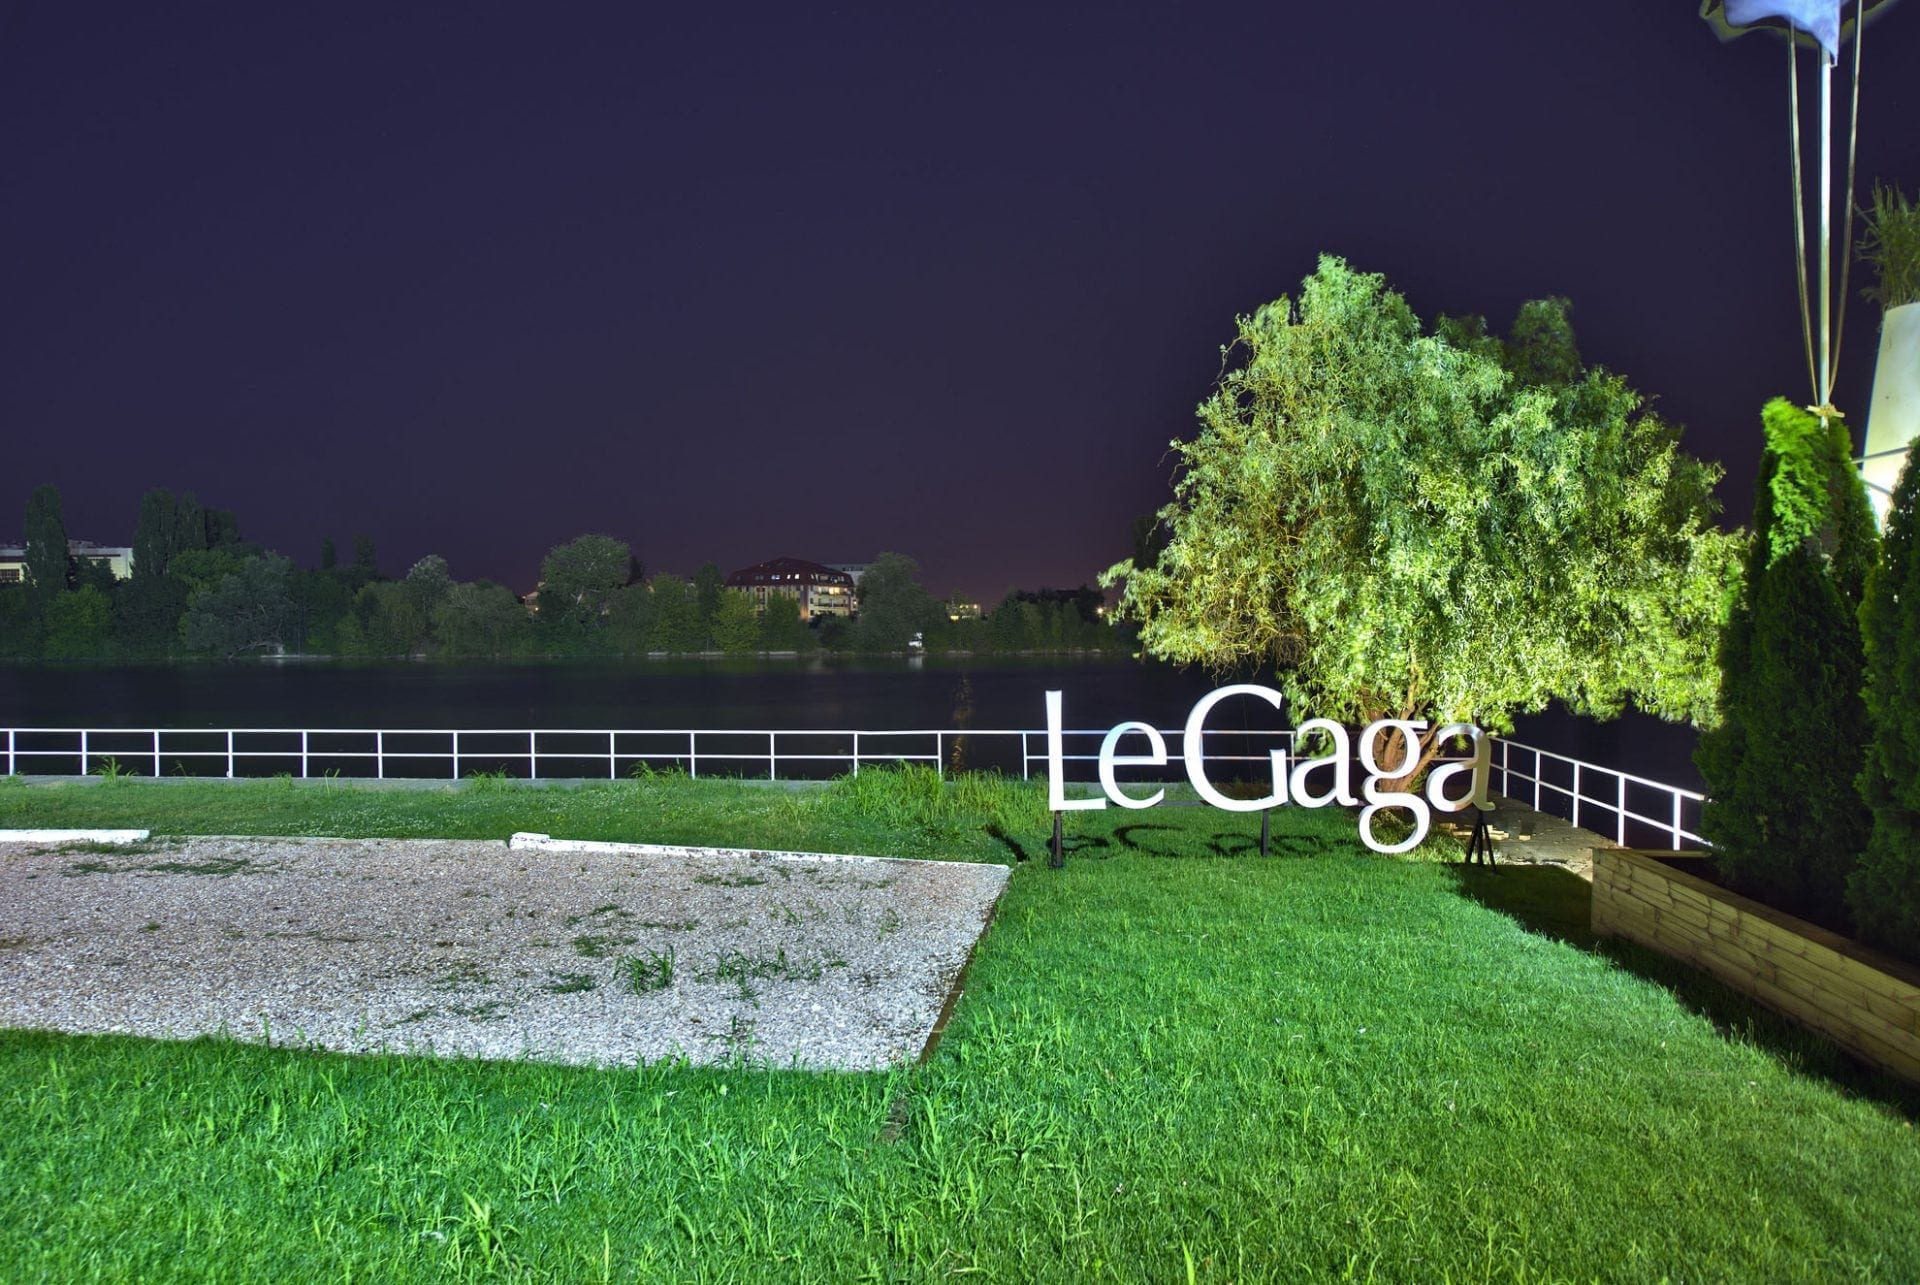 Club LeGaga - in 2012, locatii, architecture, Untitled HDR2 1920x1285